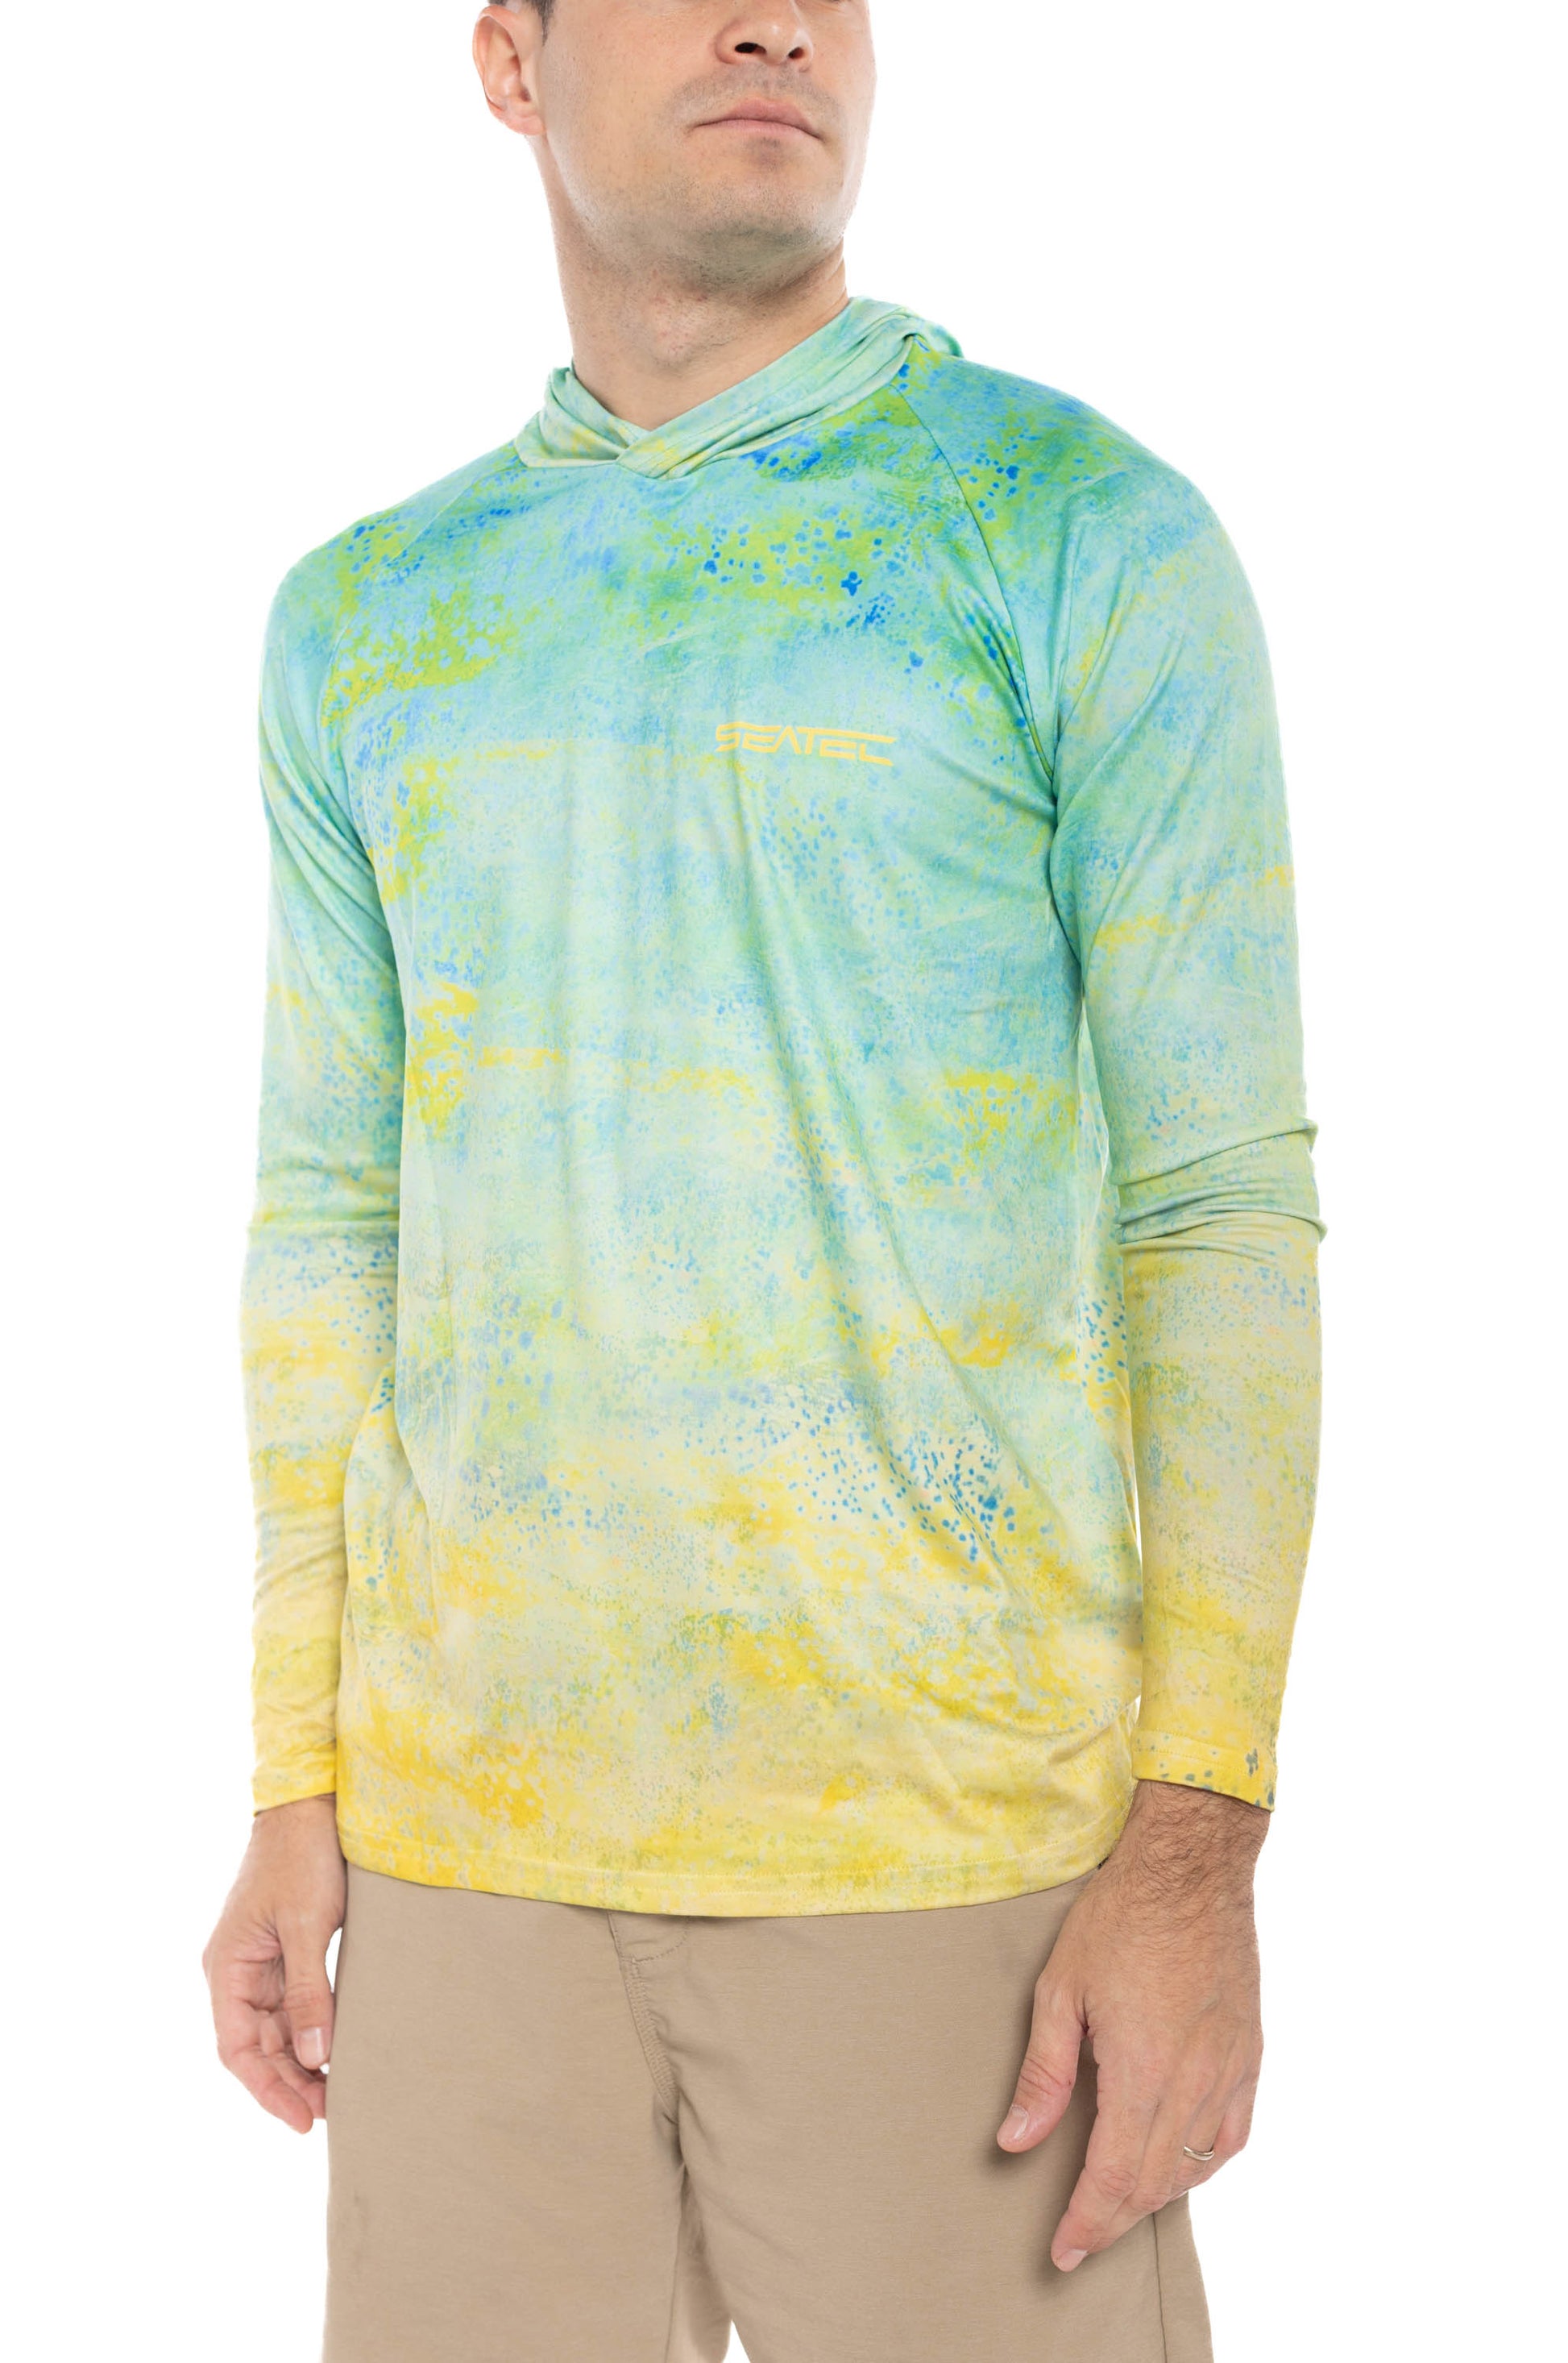 Mahi - Men's Hooded Performance Fishing Shirt - Best Sun Shirts - Multi-Seasonal - UPF 50+ - Long Sleeve Fishing Shirt - 3X Large